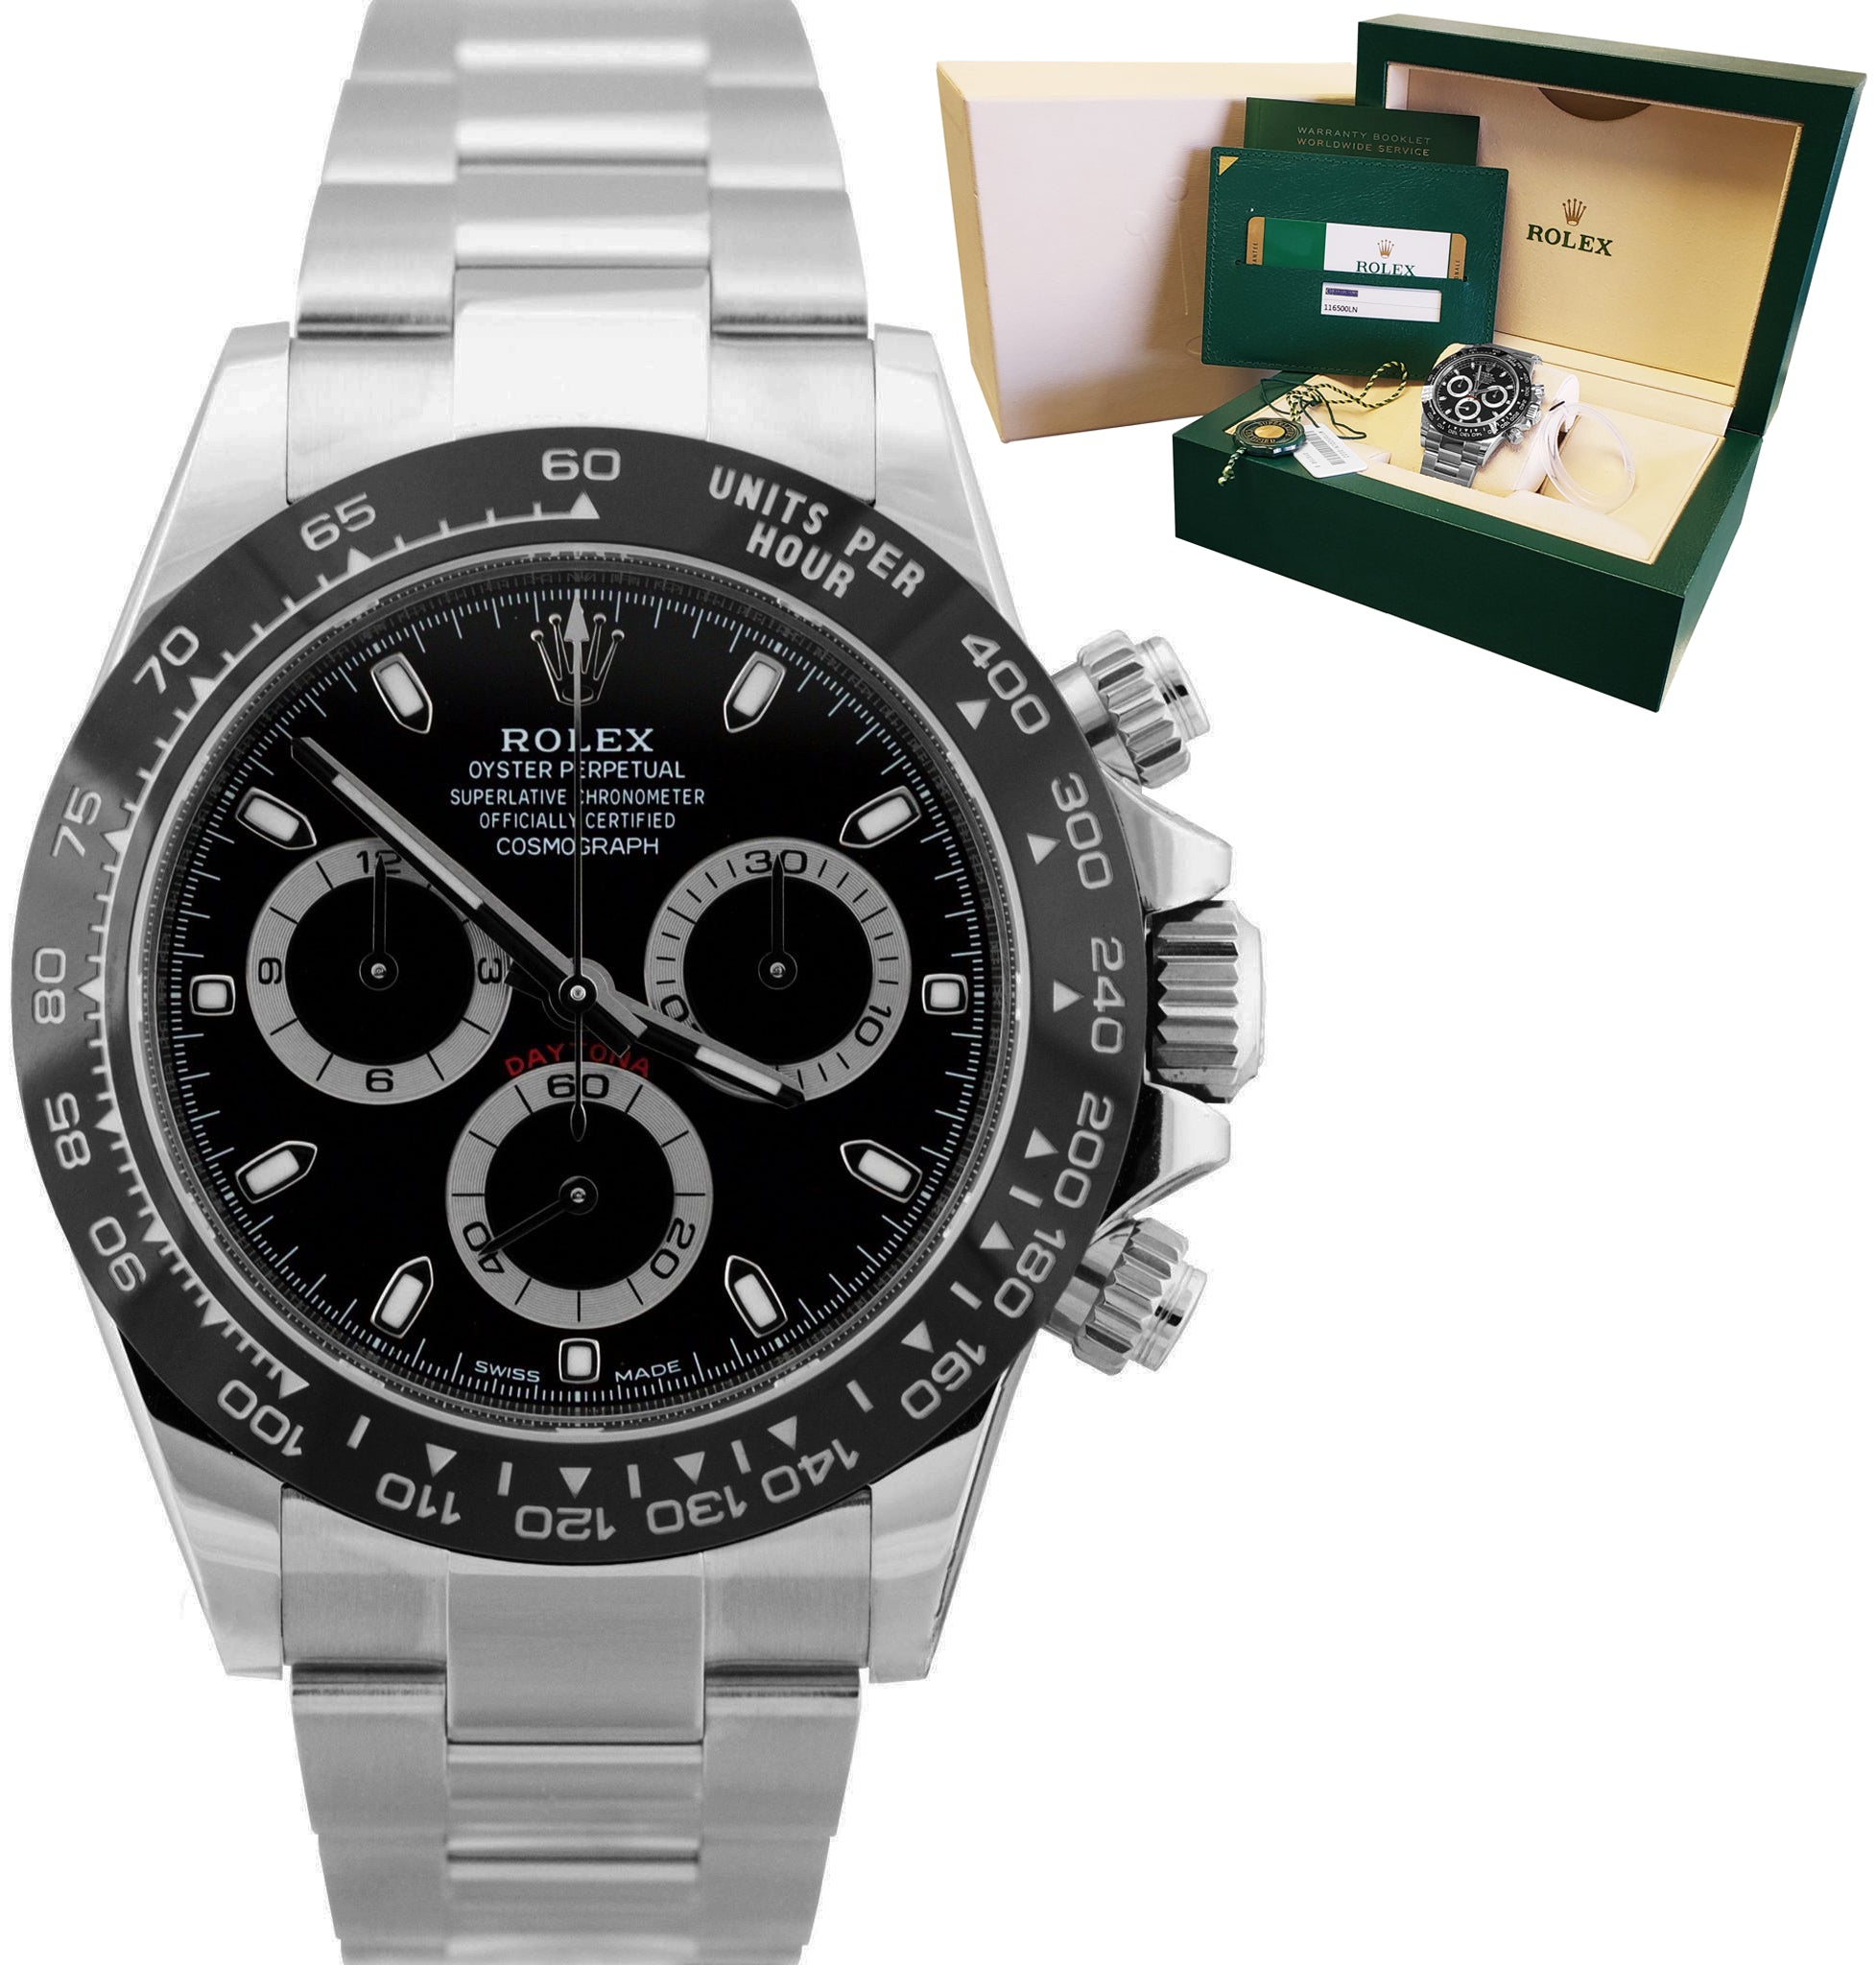 2019 Rolex Daytona Cosmograph 116500 LN Black Stainless Steel Chronograph Watch